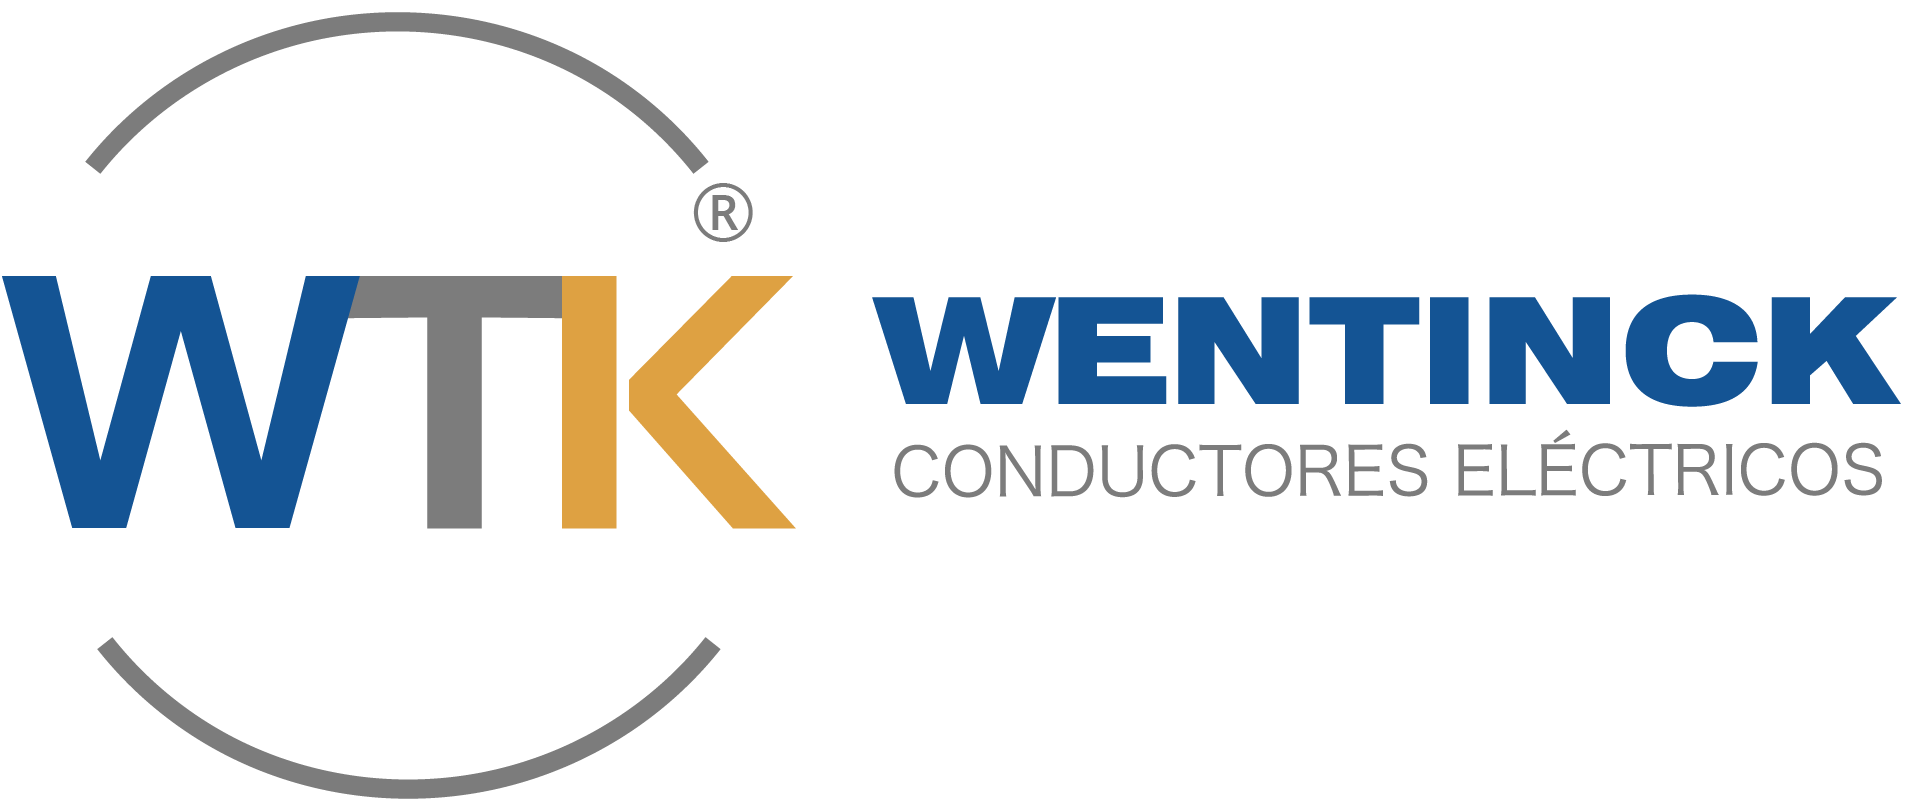 Nuevo logo WTK Wentinck ®